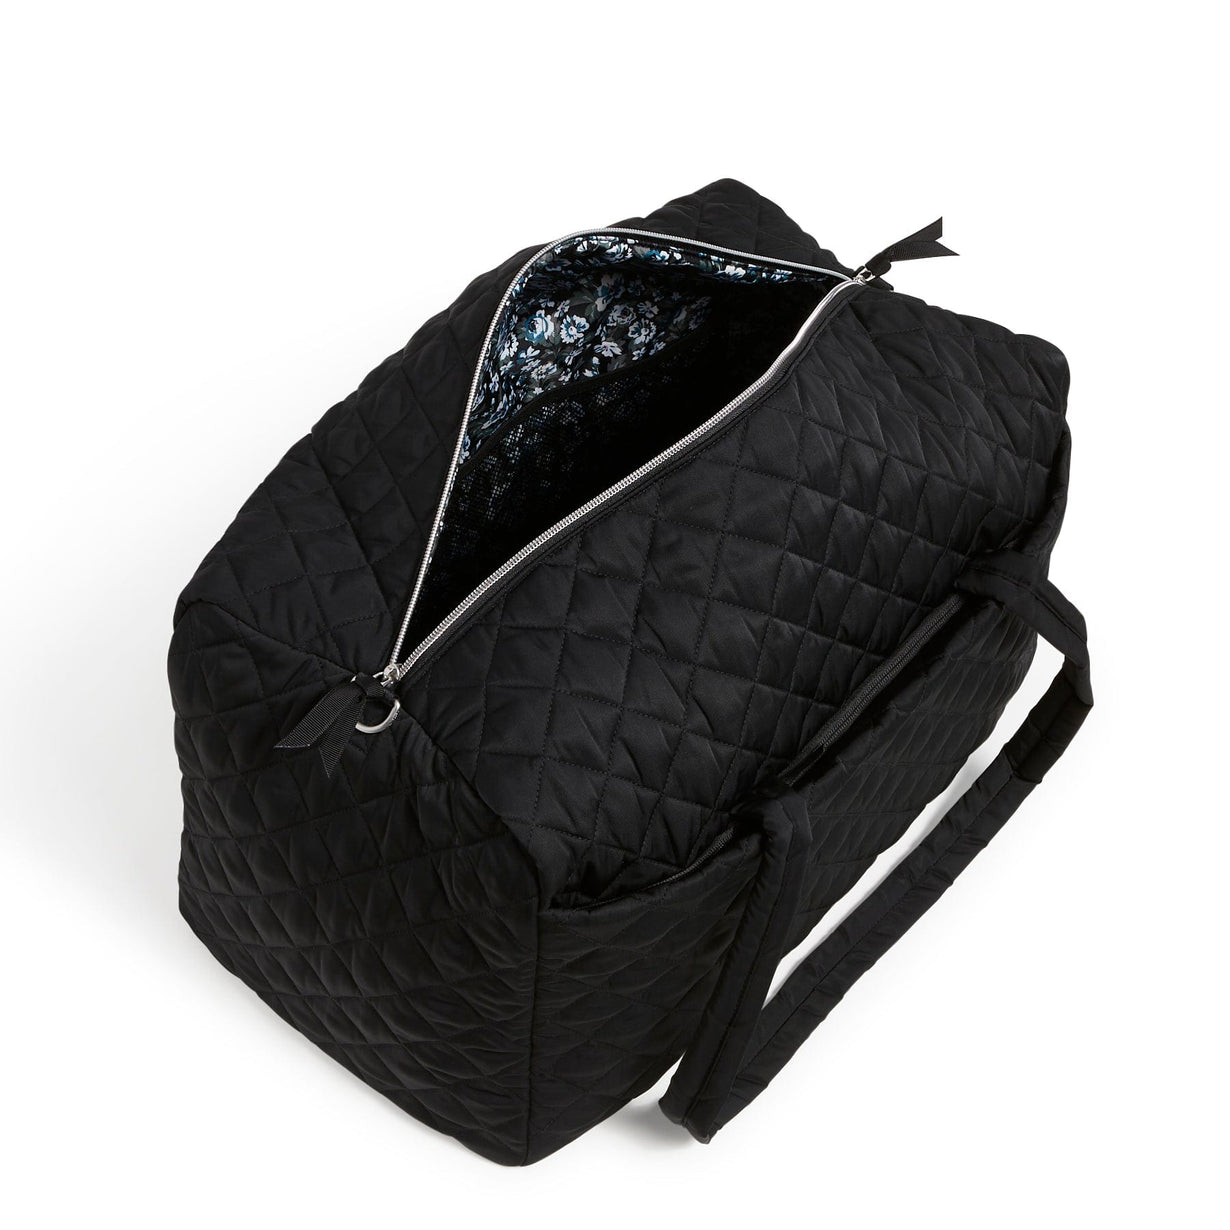 Black Duffel Bag | 25Ltrs | Luggage & Gym Bags | Official Madlug™